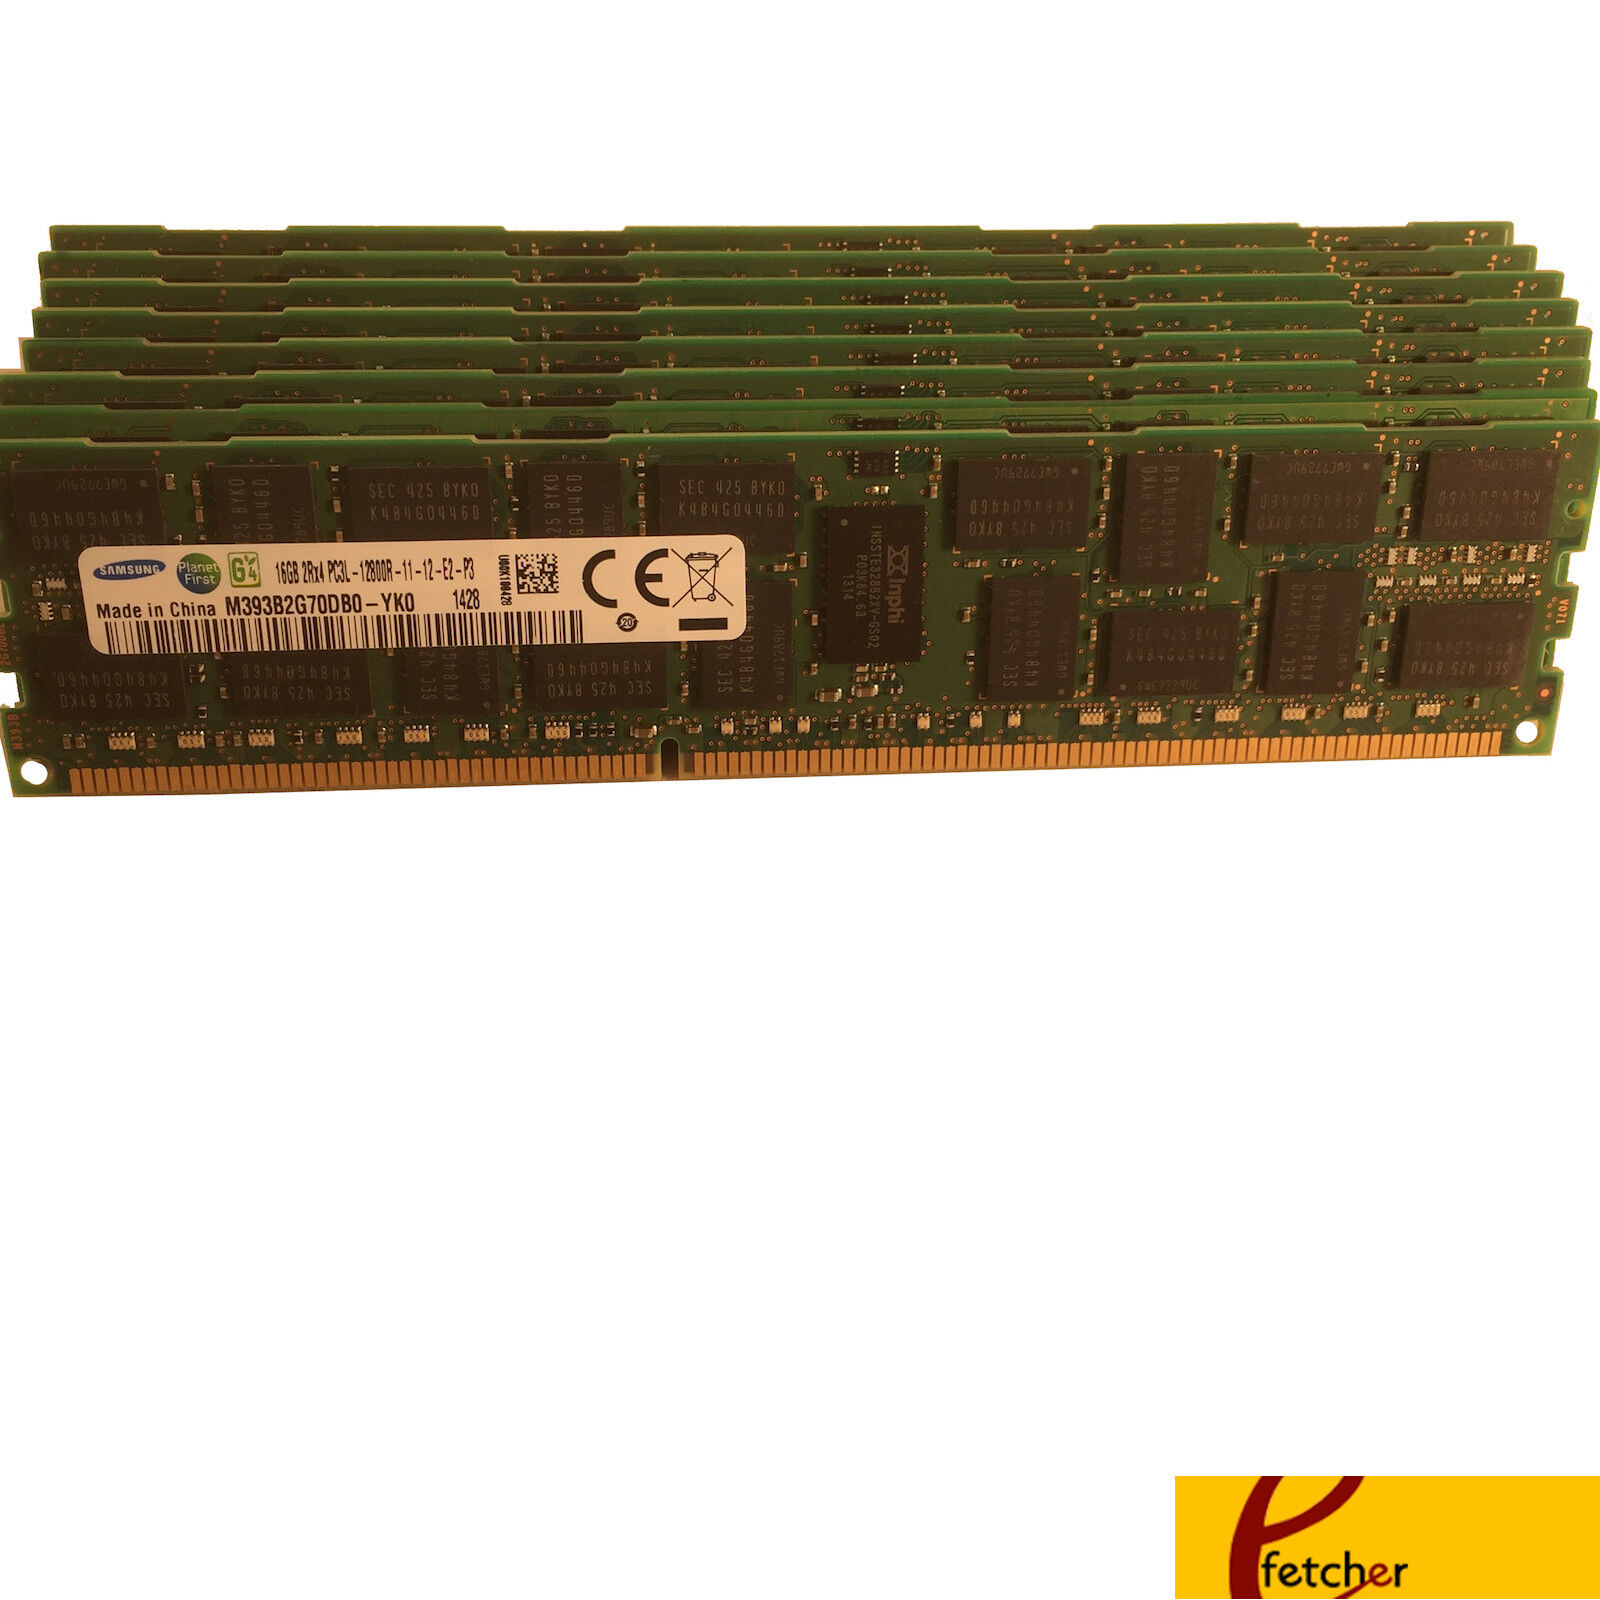 96GB (6 x 16GB) DDR3 1600 Memory for Dell PowerEdge T320 R320